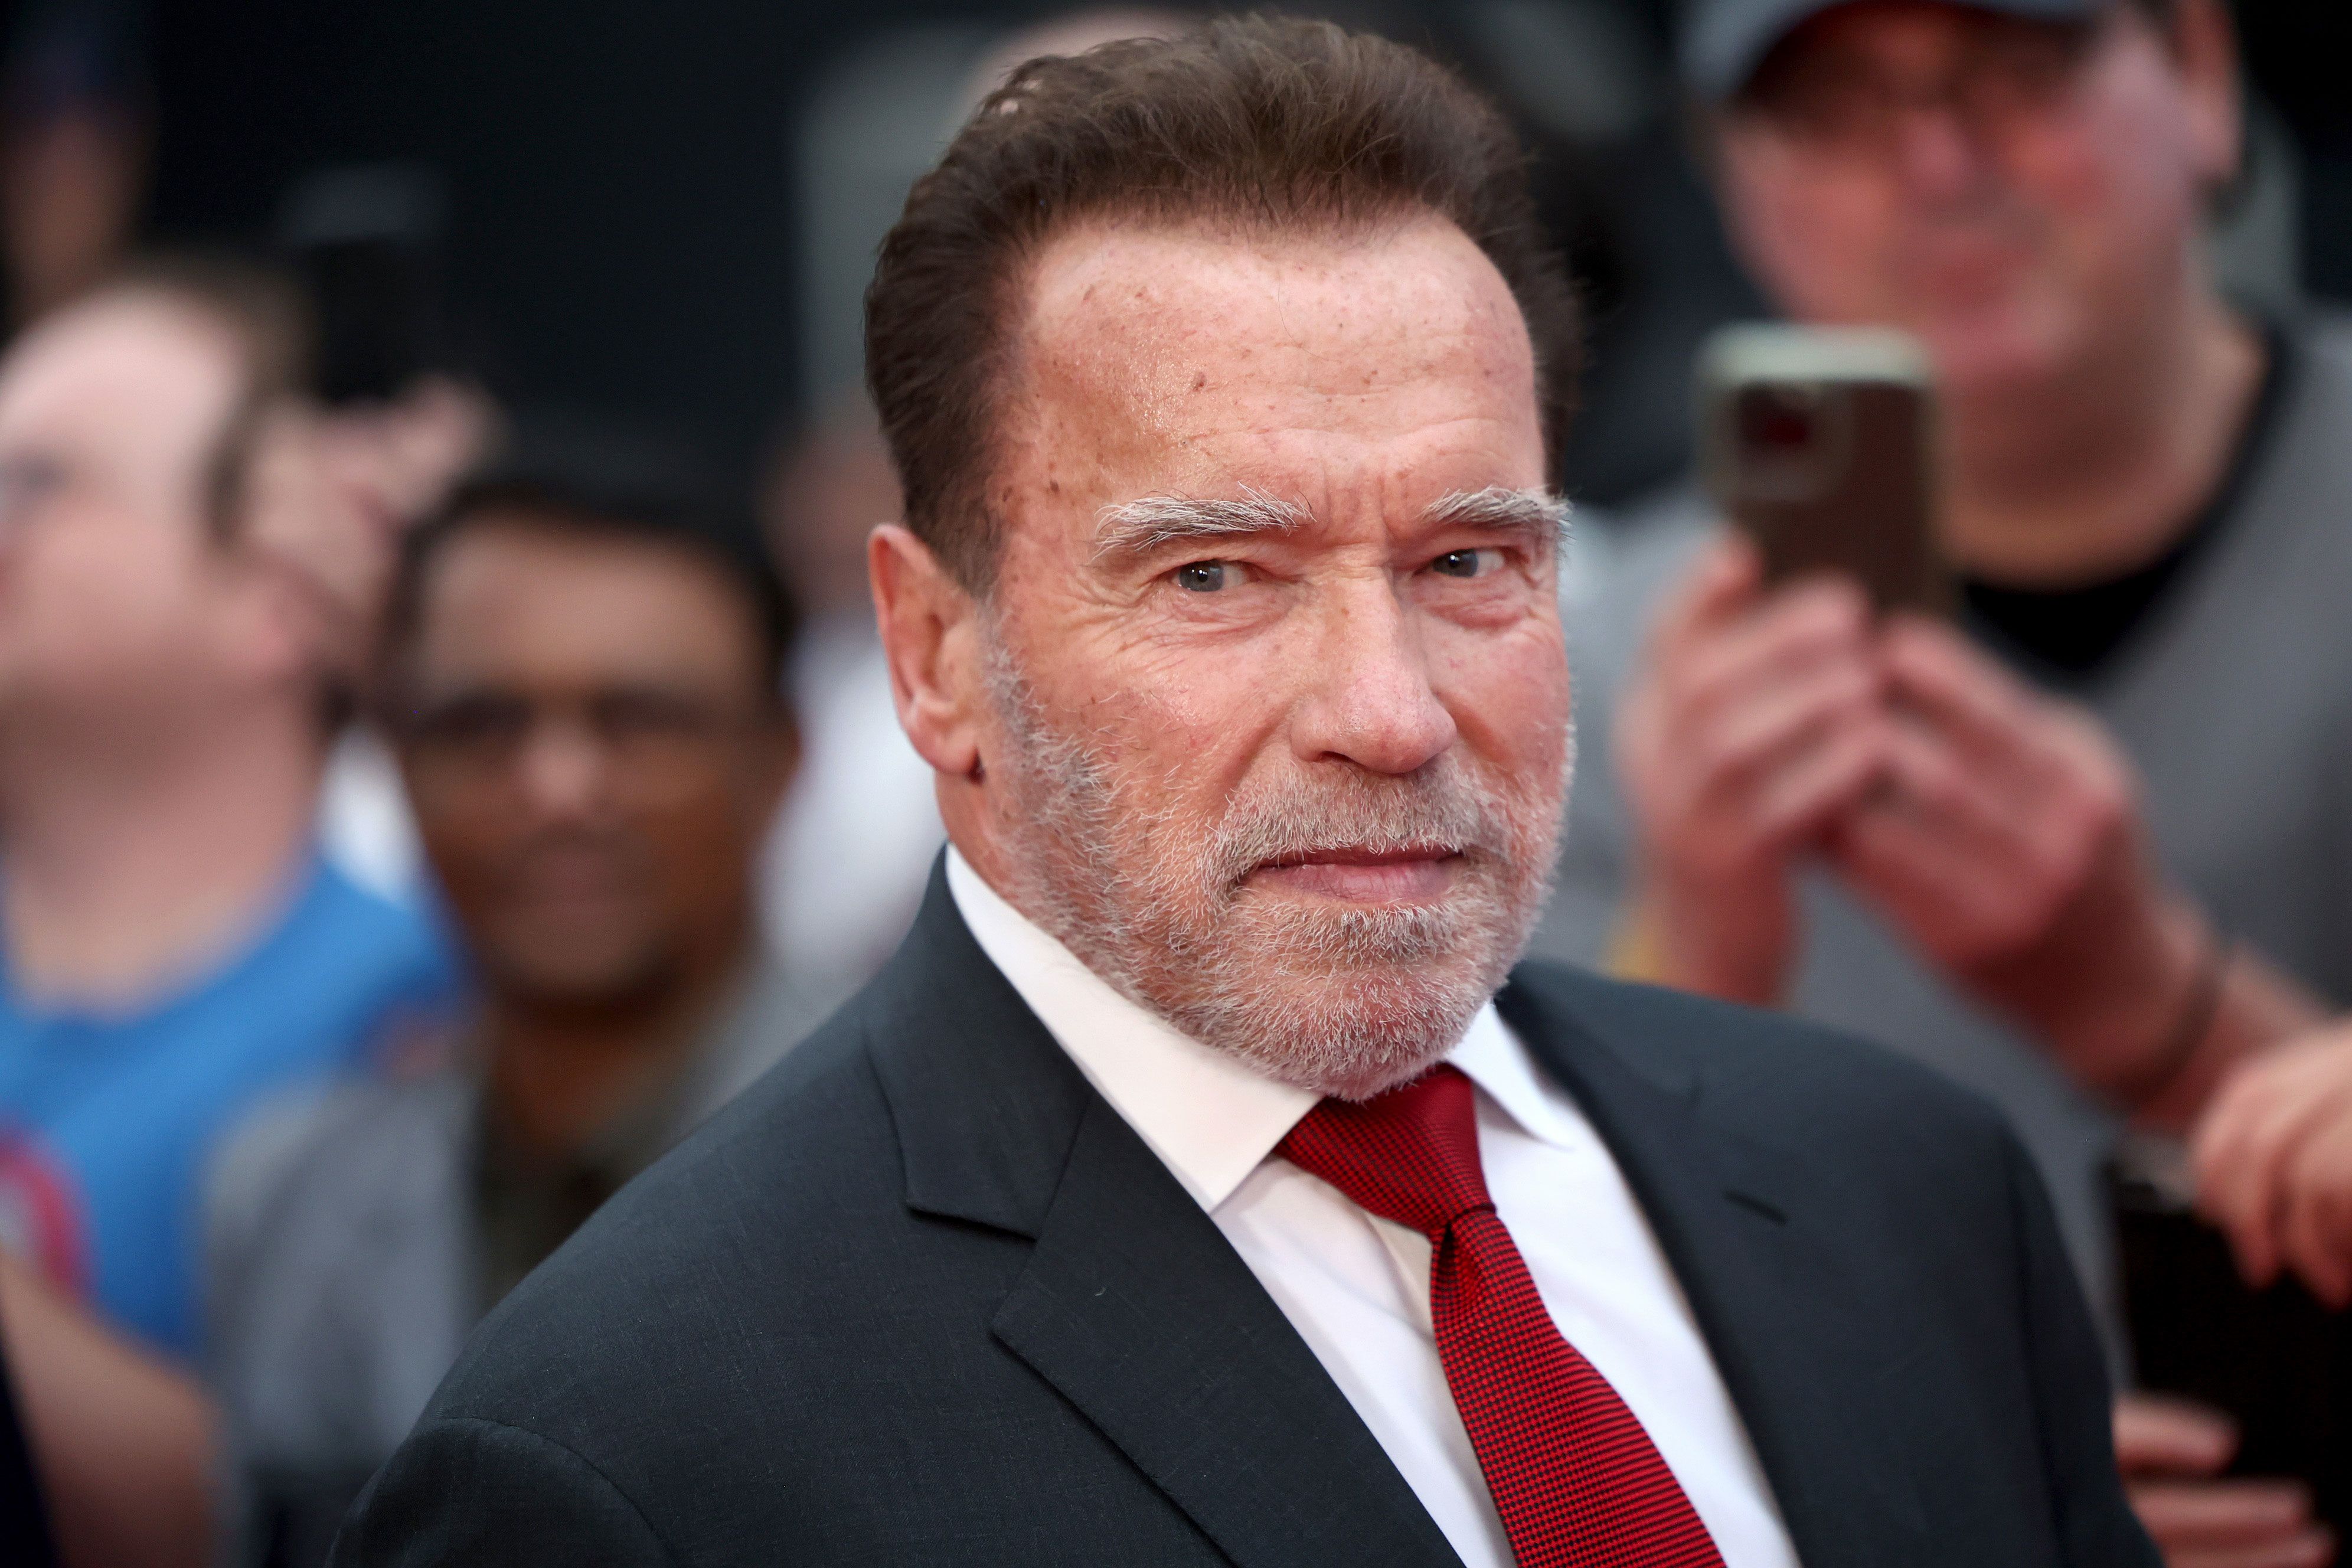 Arnold Schwarzenegger on aging and body image struggles: 'It just sucks